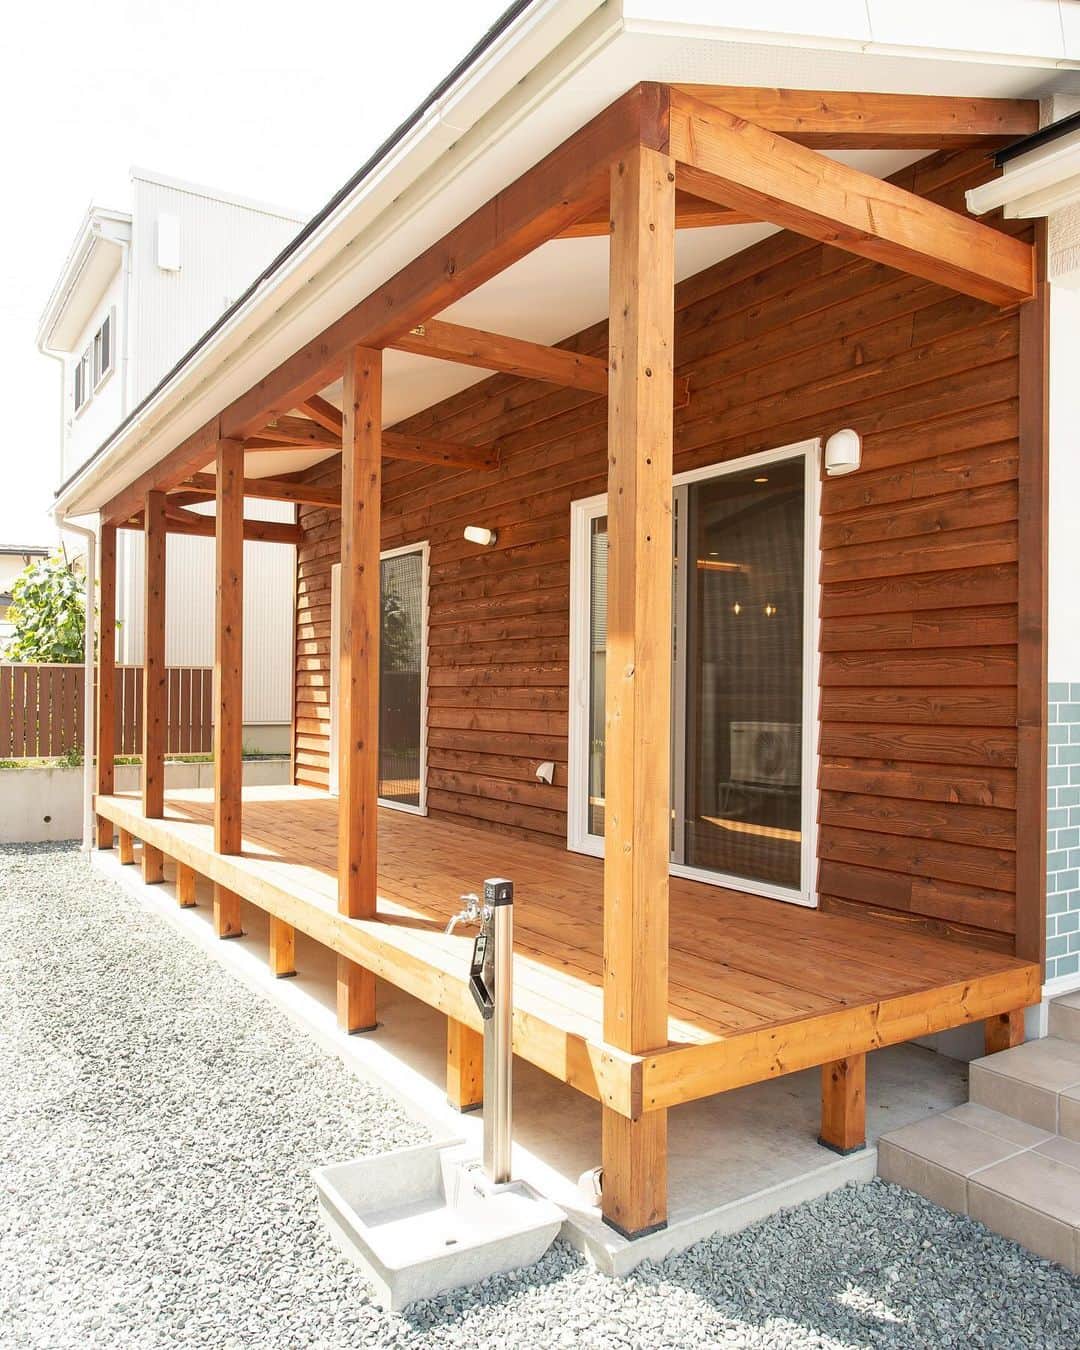 fukui-kensetsuのインスタグラム：「山形市桜田西モデルハウスのカバードポーチです。  外壁に使用したレッドシダーとデッキ材を同じ塗装で仕上げて温もりのある雰囲気になりました✨  豊かなお家時間を過ごすのに良い場所になっています。  #カバードポーチ #カバードポーチのあるお家 #ウッドデッキ #外壁レッドシダー #レッドシダー外壁 #自然塗料 #自然塗料リボス #自然素材の家 #自然素材の家づくり #マイホーム  +++--------------------+++  山形暮らしの家づくり  #福井建設#山形市#工務店#注文住宅#山形注文住宅#山形の工務店#山形住宅会社  山形の風土に合った注文住宅を建設しています。  ↓プロフィール↓ @fukui_kensetsu  ↓現場のことや日常をご紹介するアカウント↓ @fukui_kensetsu_pr  お問い合わせなど、お気軽にDMしてください♪ +++--------------------+++」